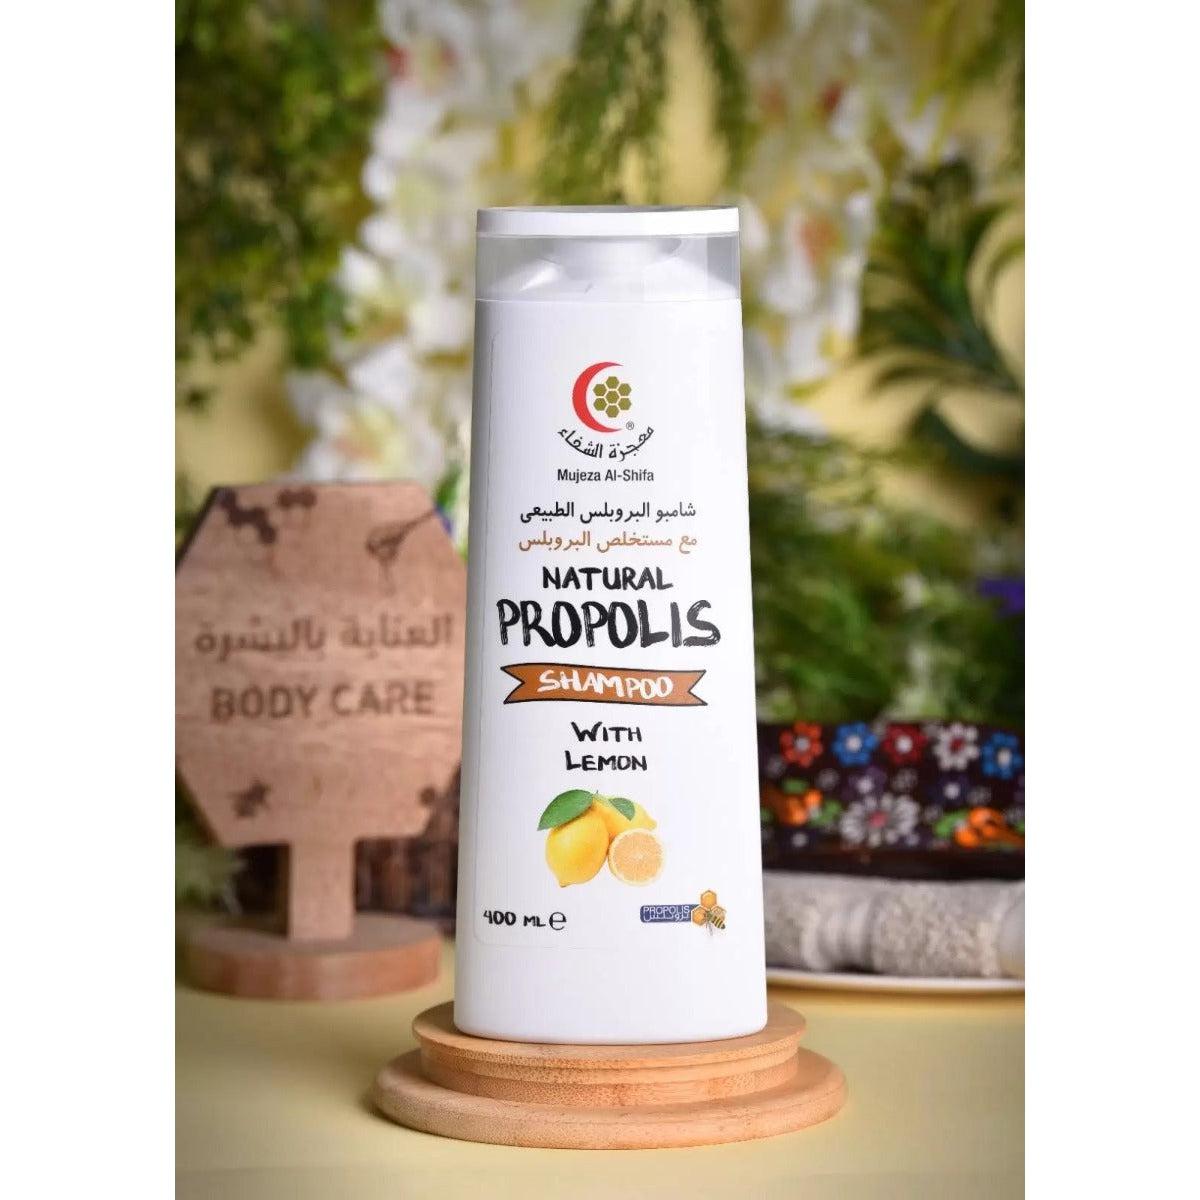 Mujeza Natural Propolis Shampoo with Lemon 400ml